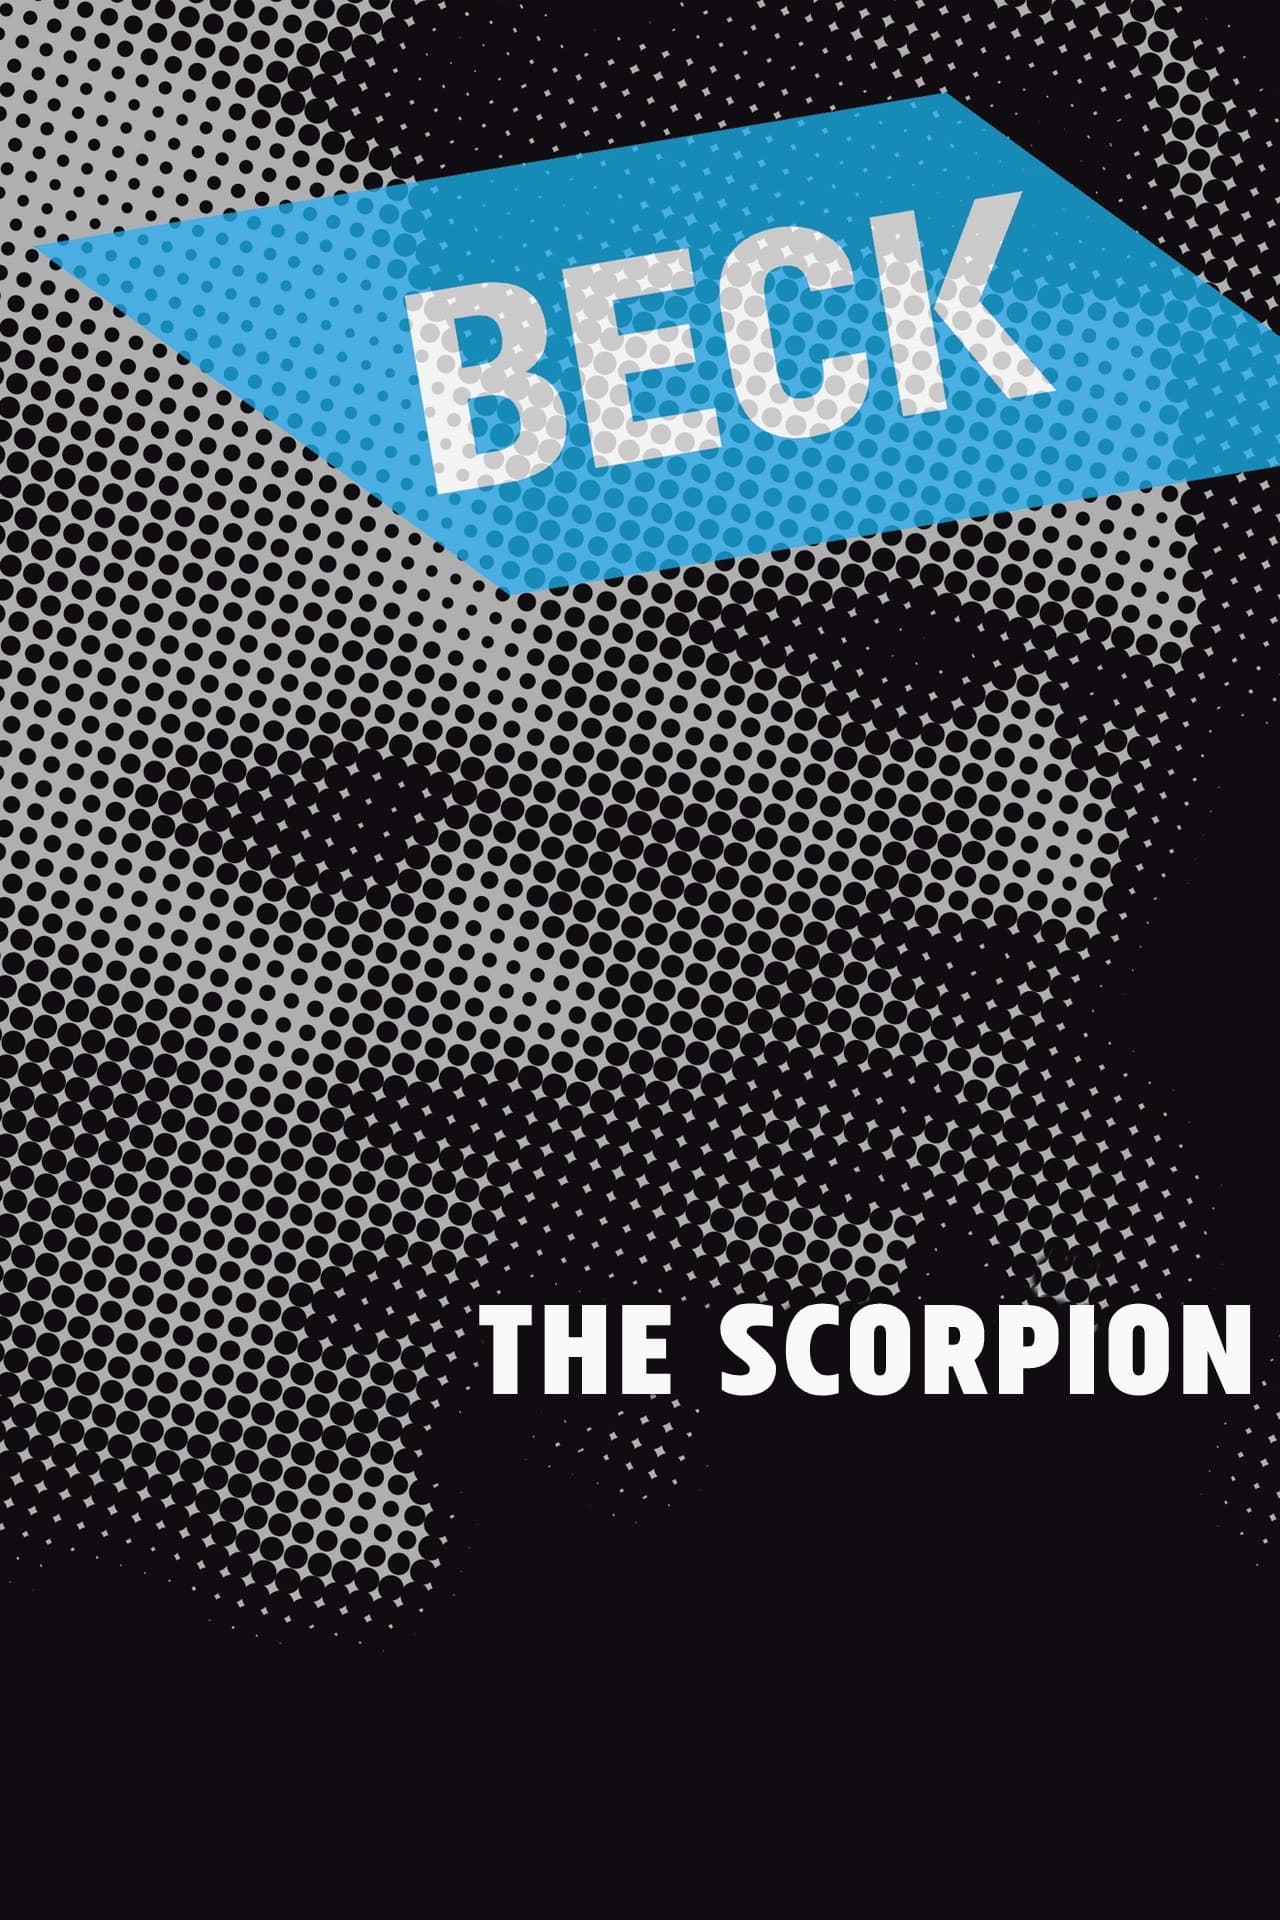 Beck 17 - The Scorpion